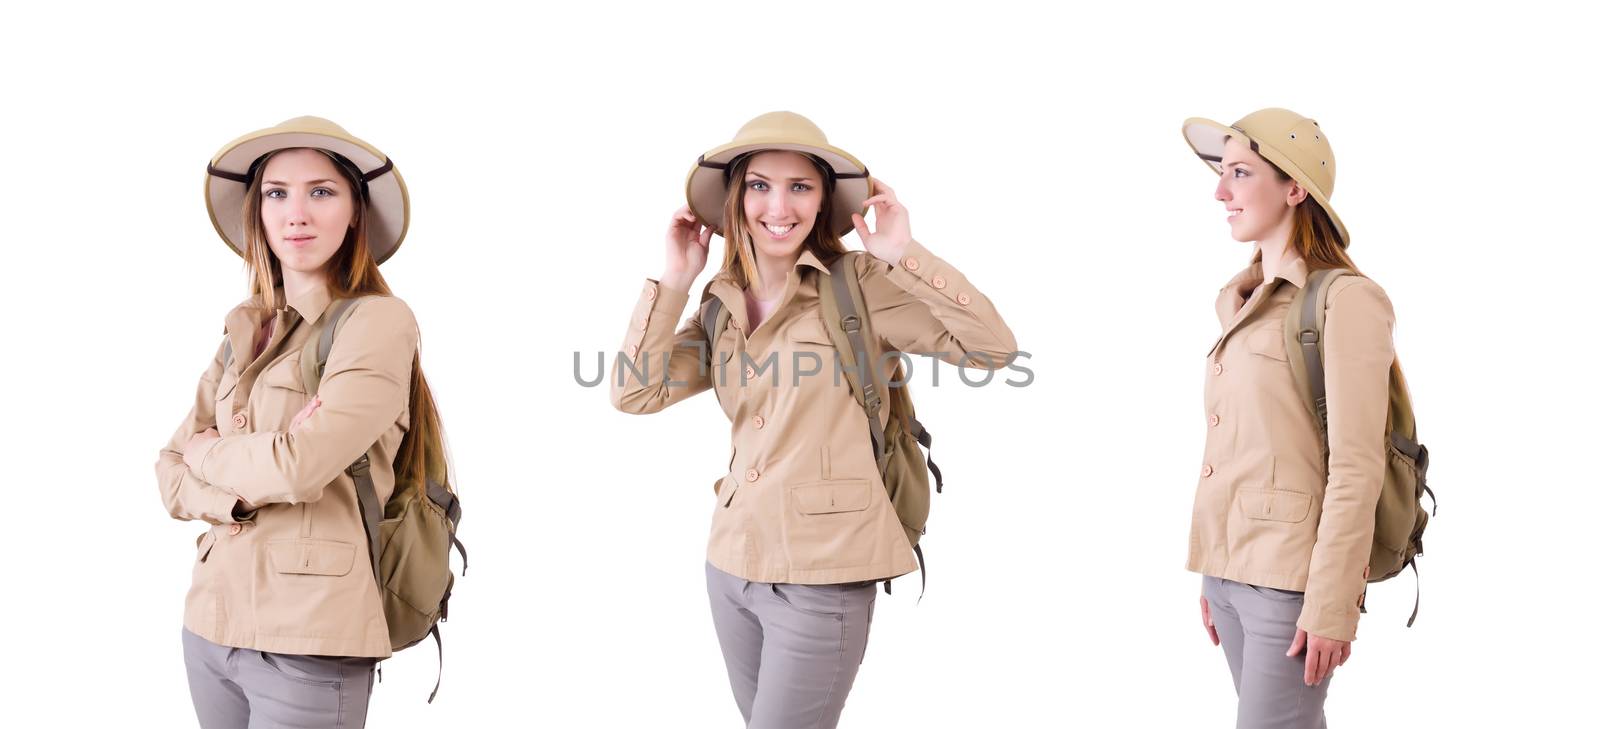 Woman wearing safari hat on white by Elnur